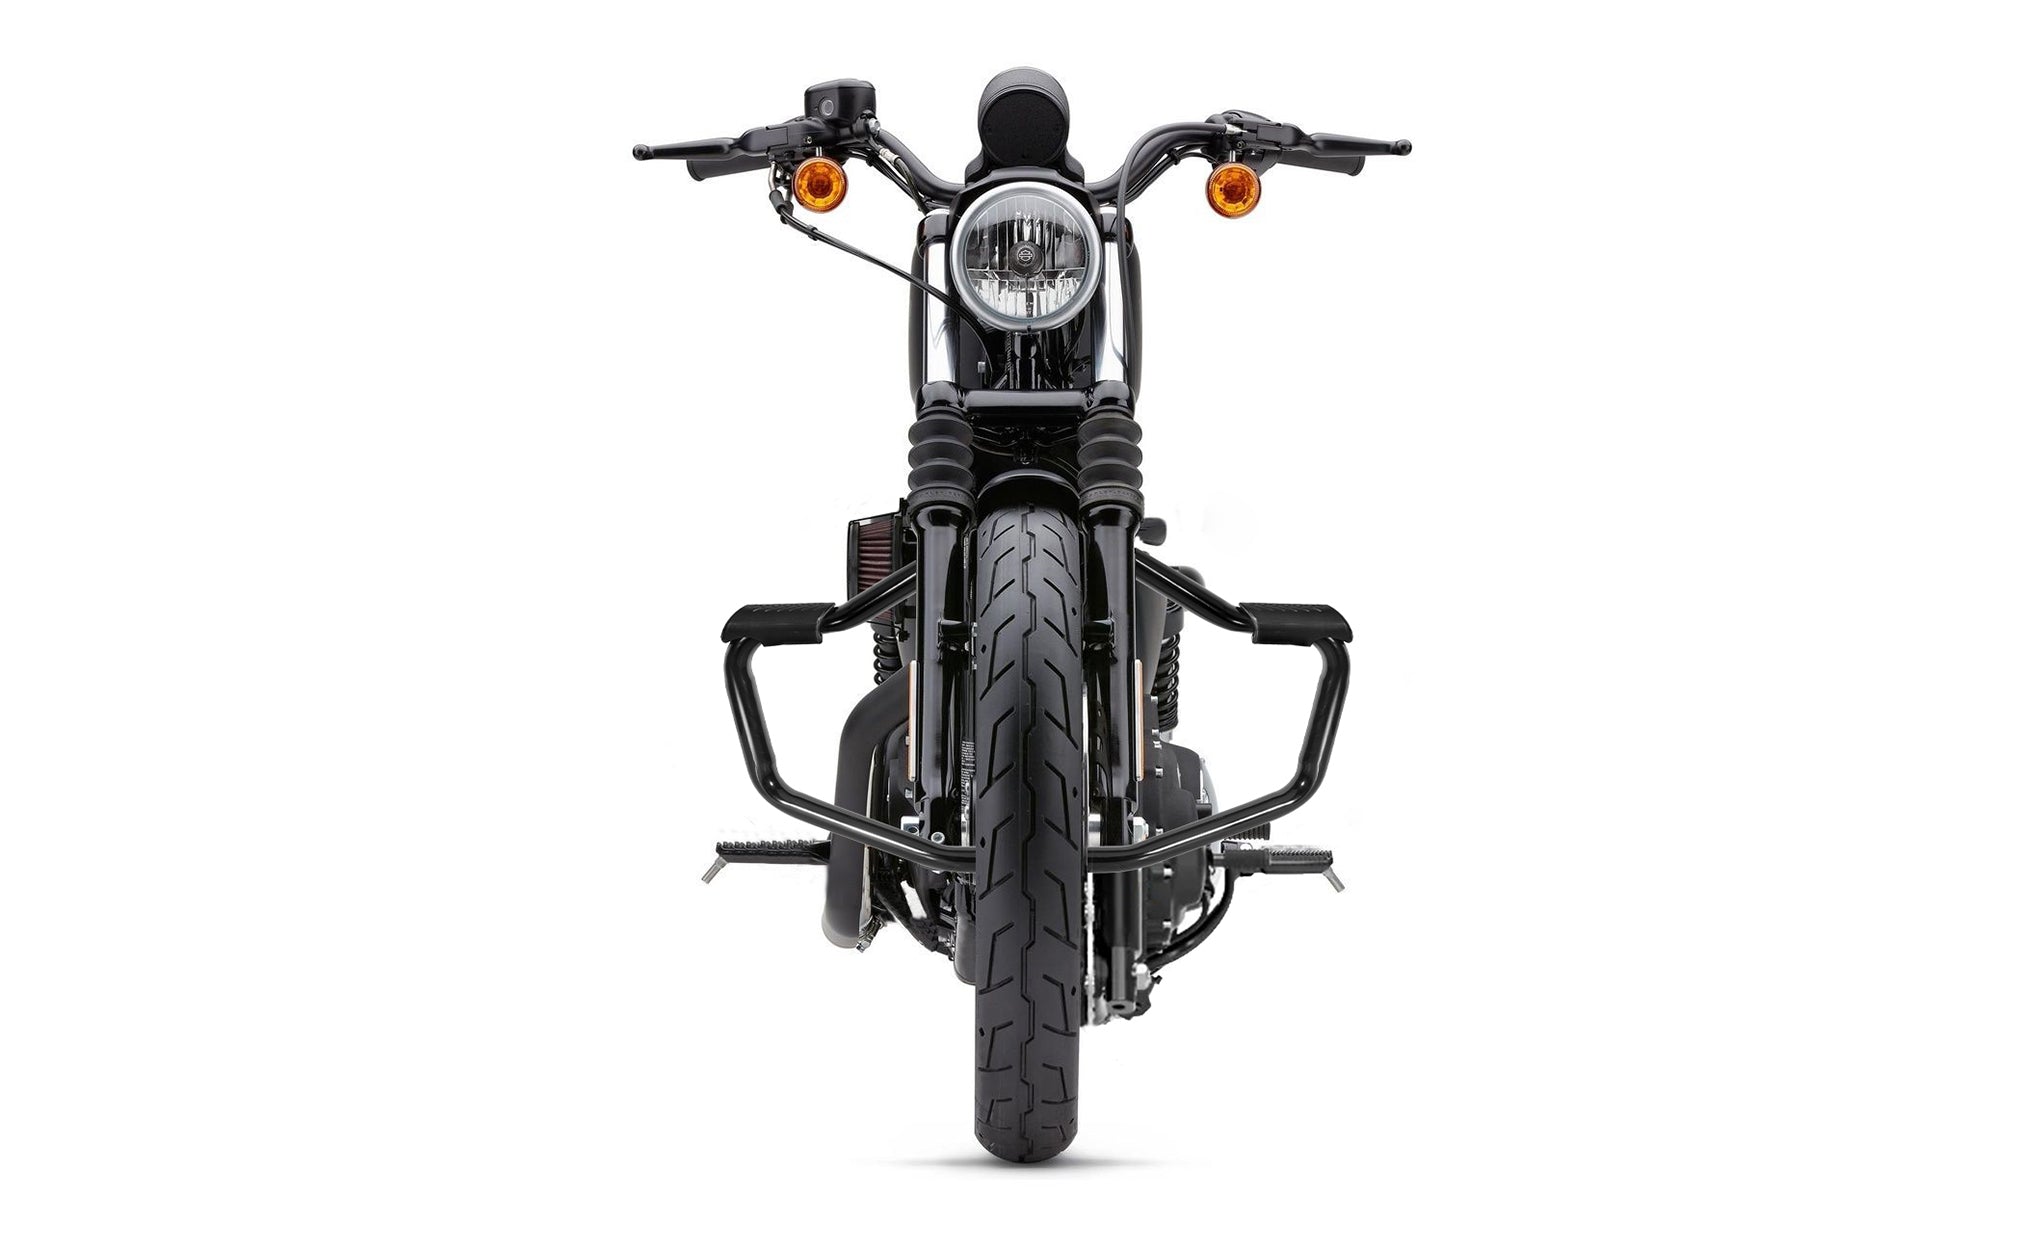 Viking Iron Born Motorcycle Crash Bar/Engine Guard for Harley Sportster 1200 Nightster XL1200N Gloss Black Bag on Bike View @expand